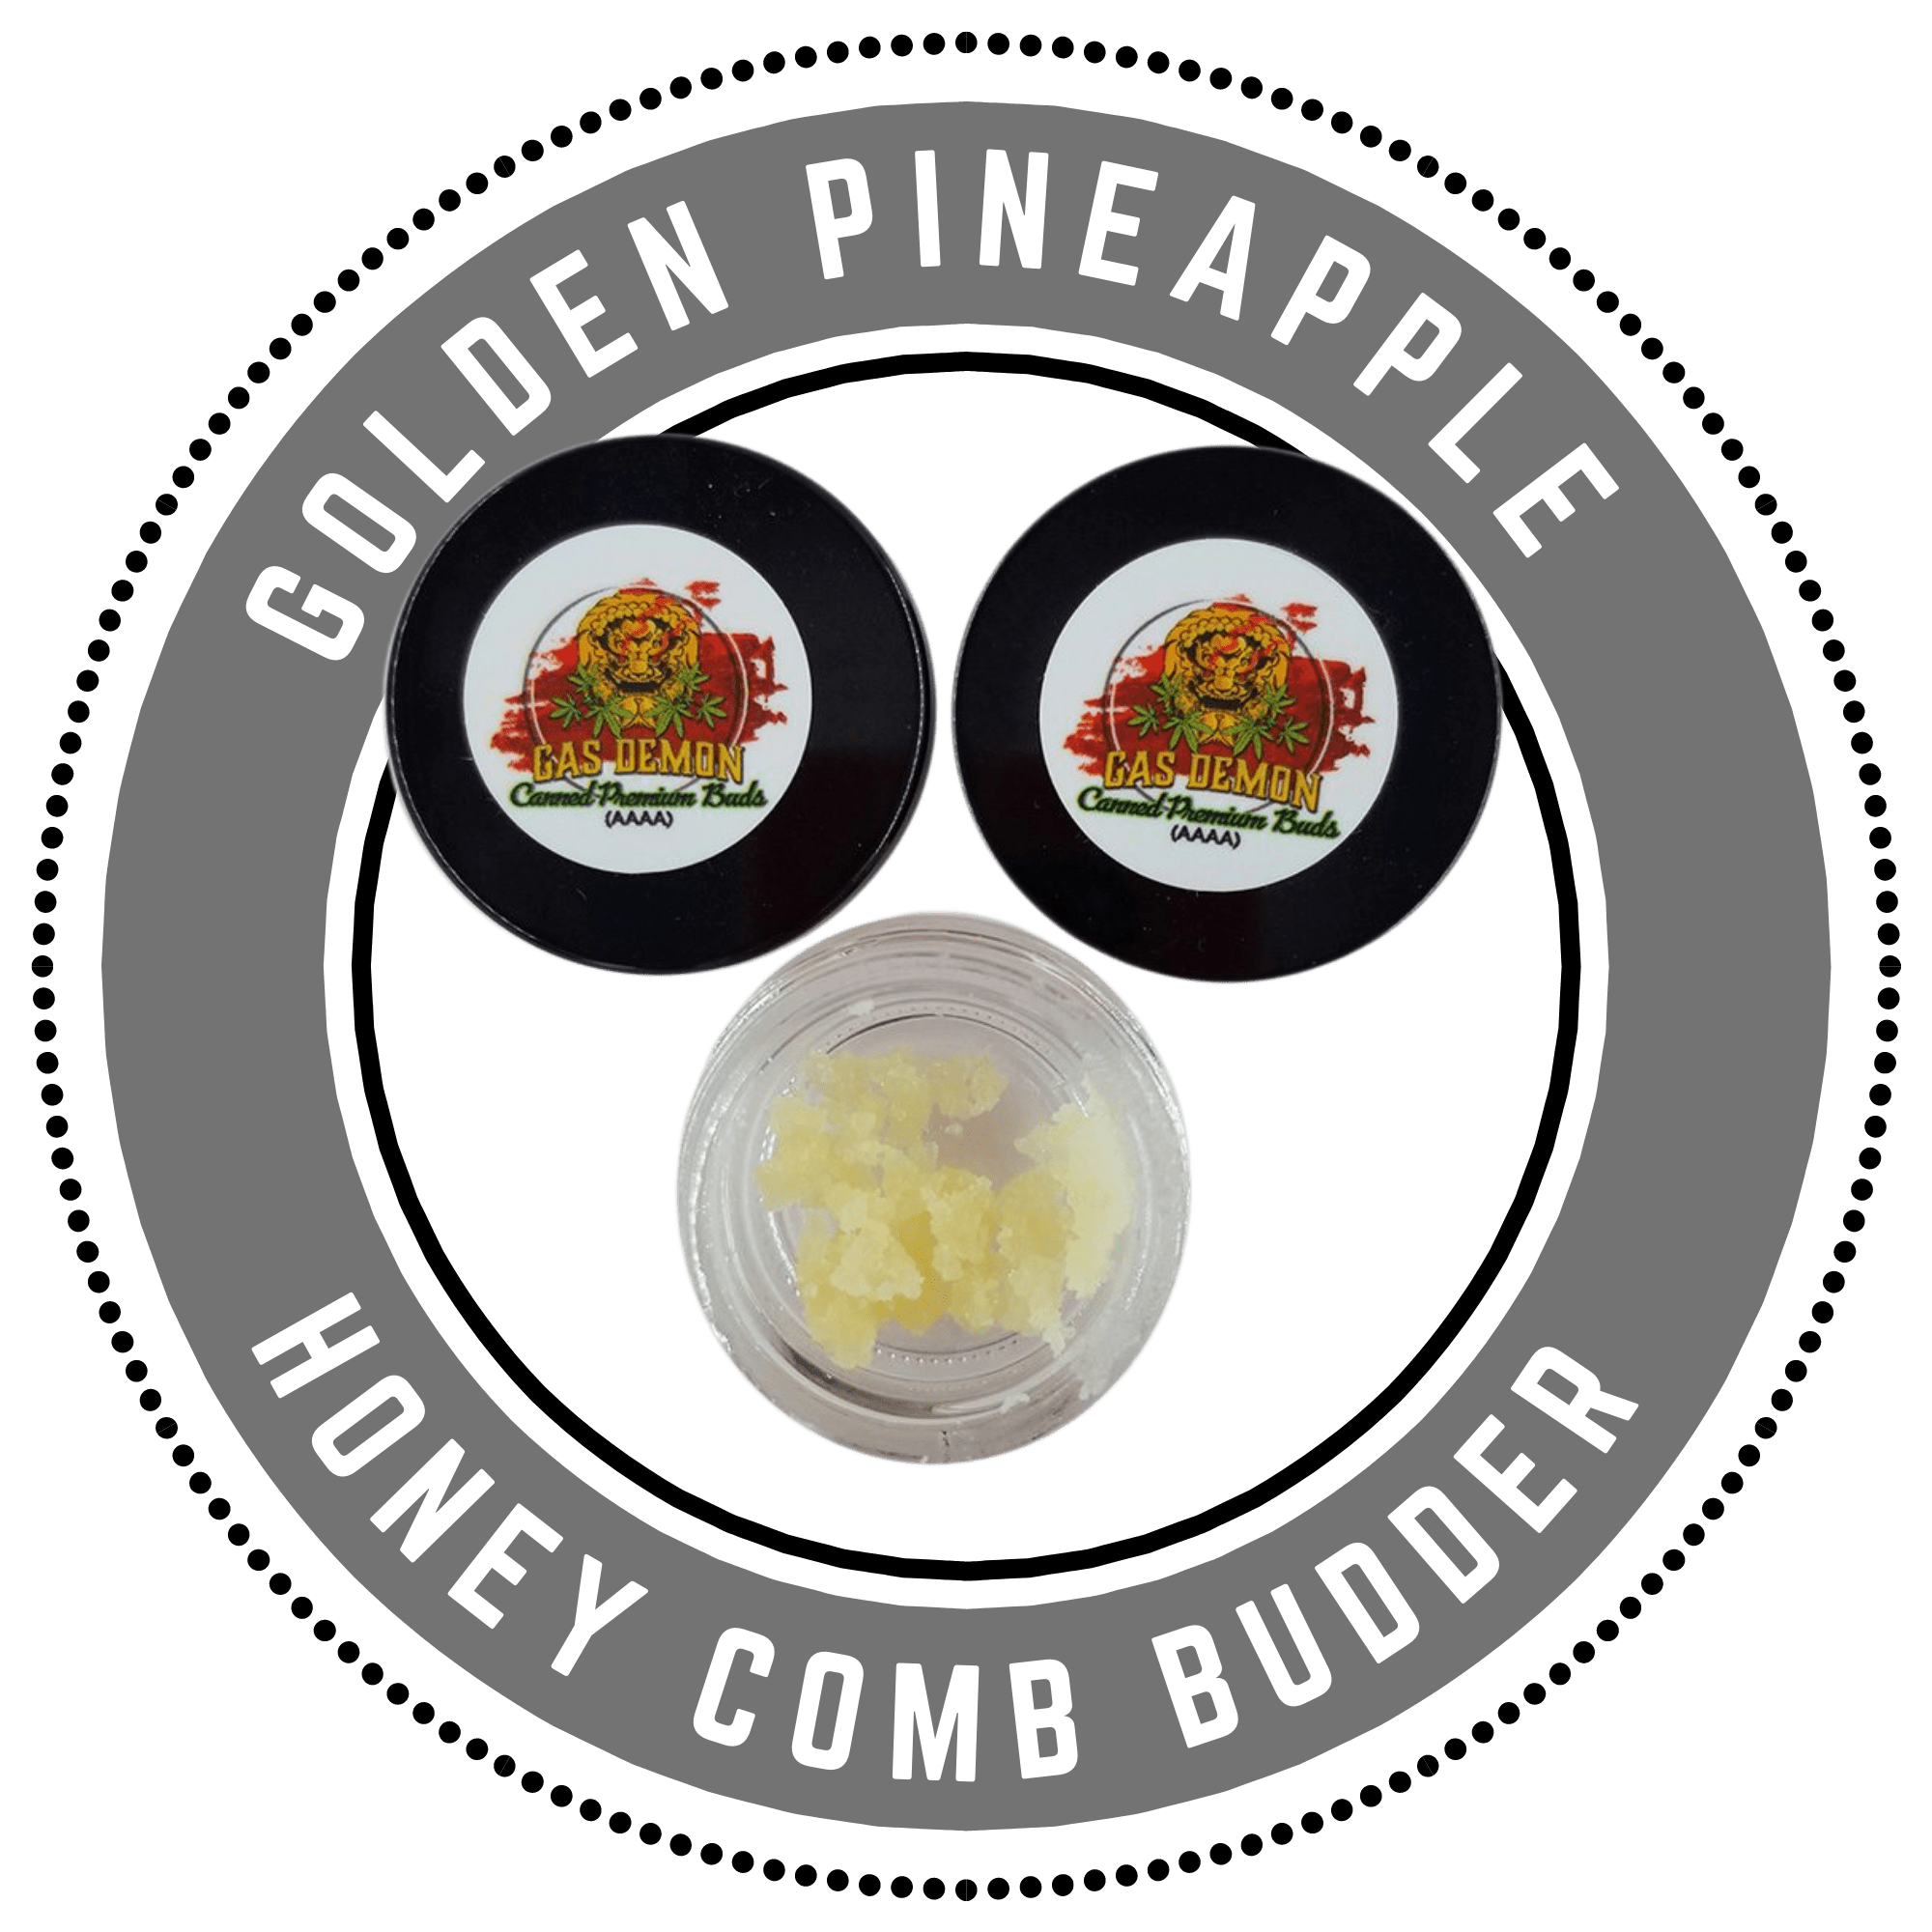 Golden Pineapple budder